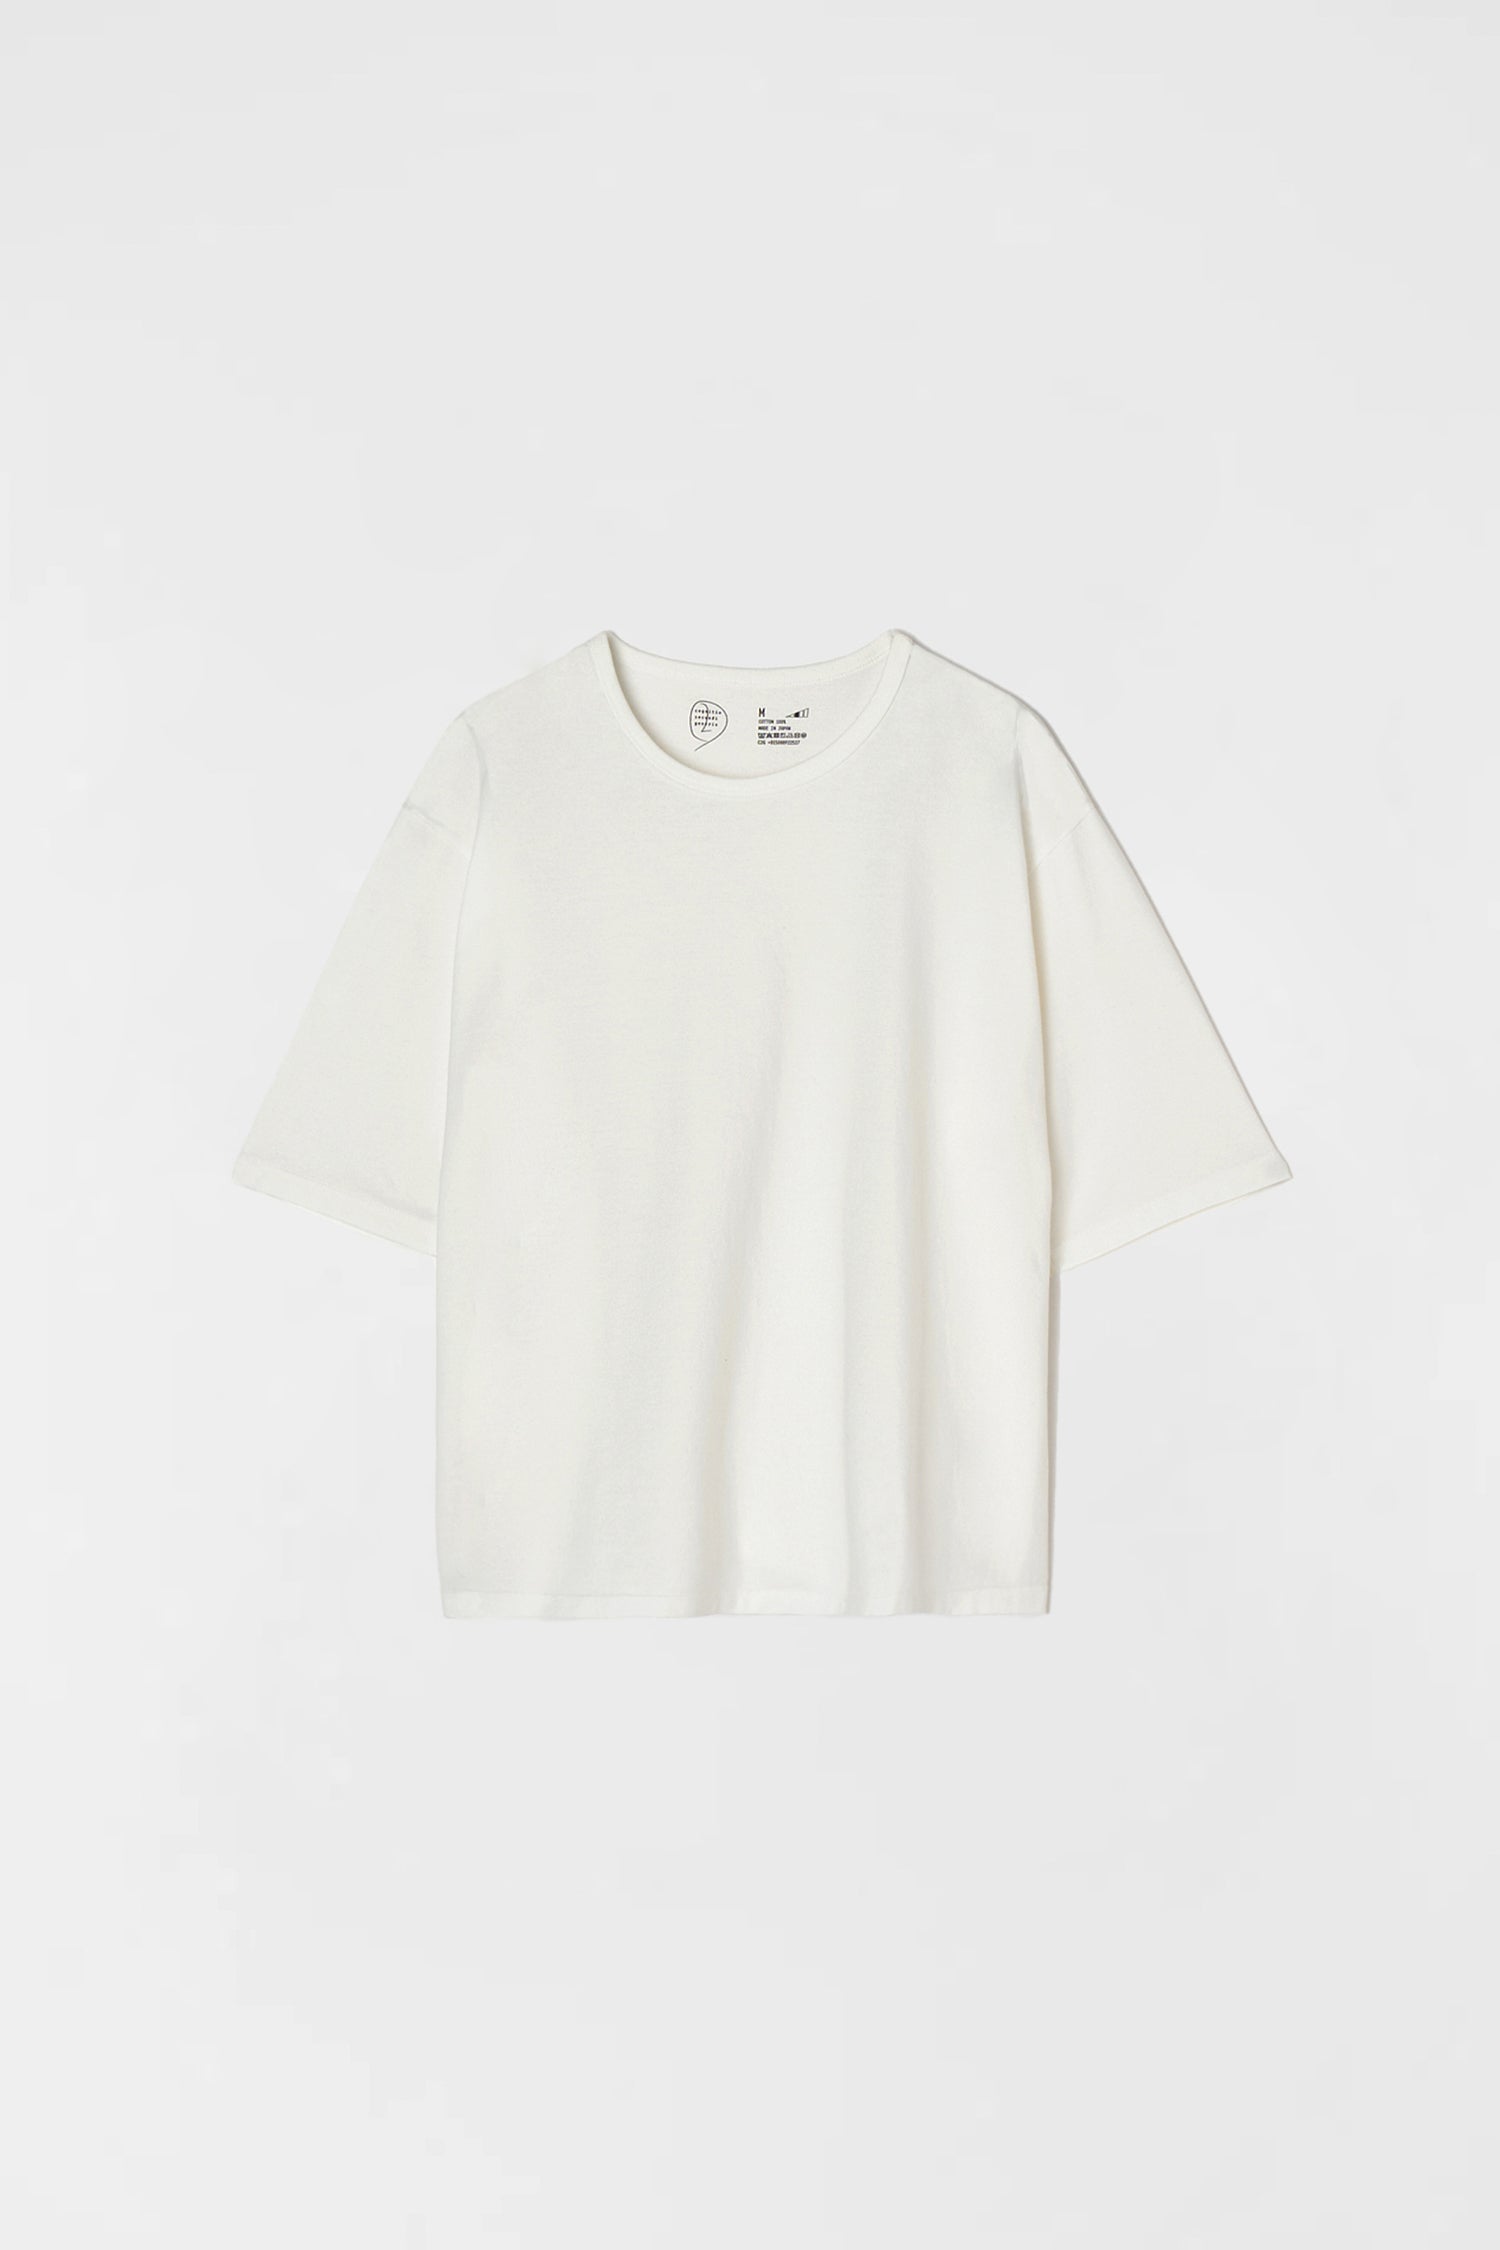 102 T-Shirt (White) | オーバーサイズ 5分袖 無地 Tシャツ ホワイト 